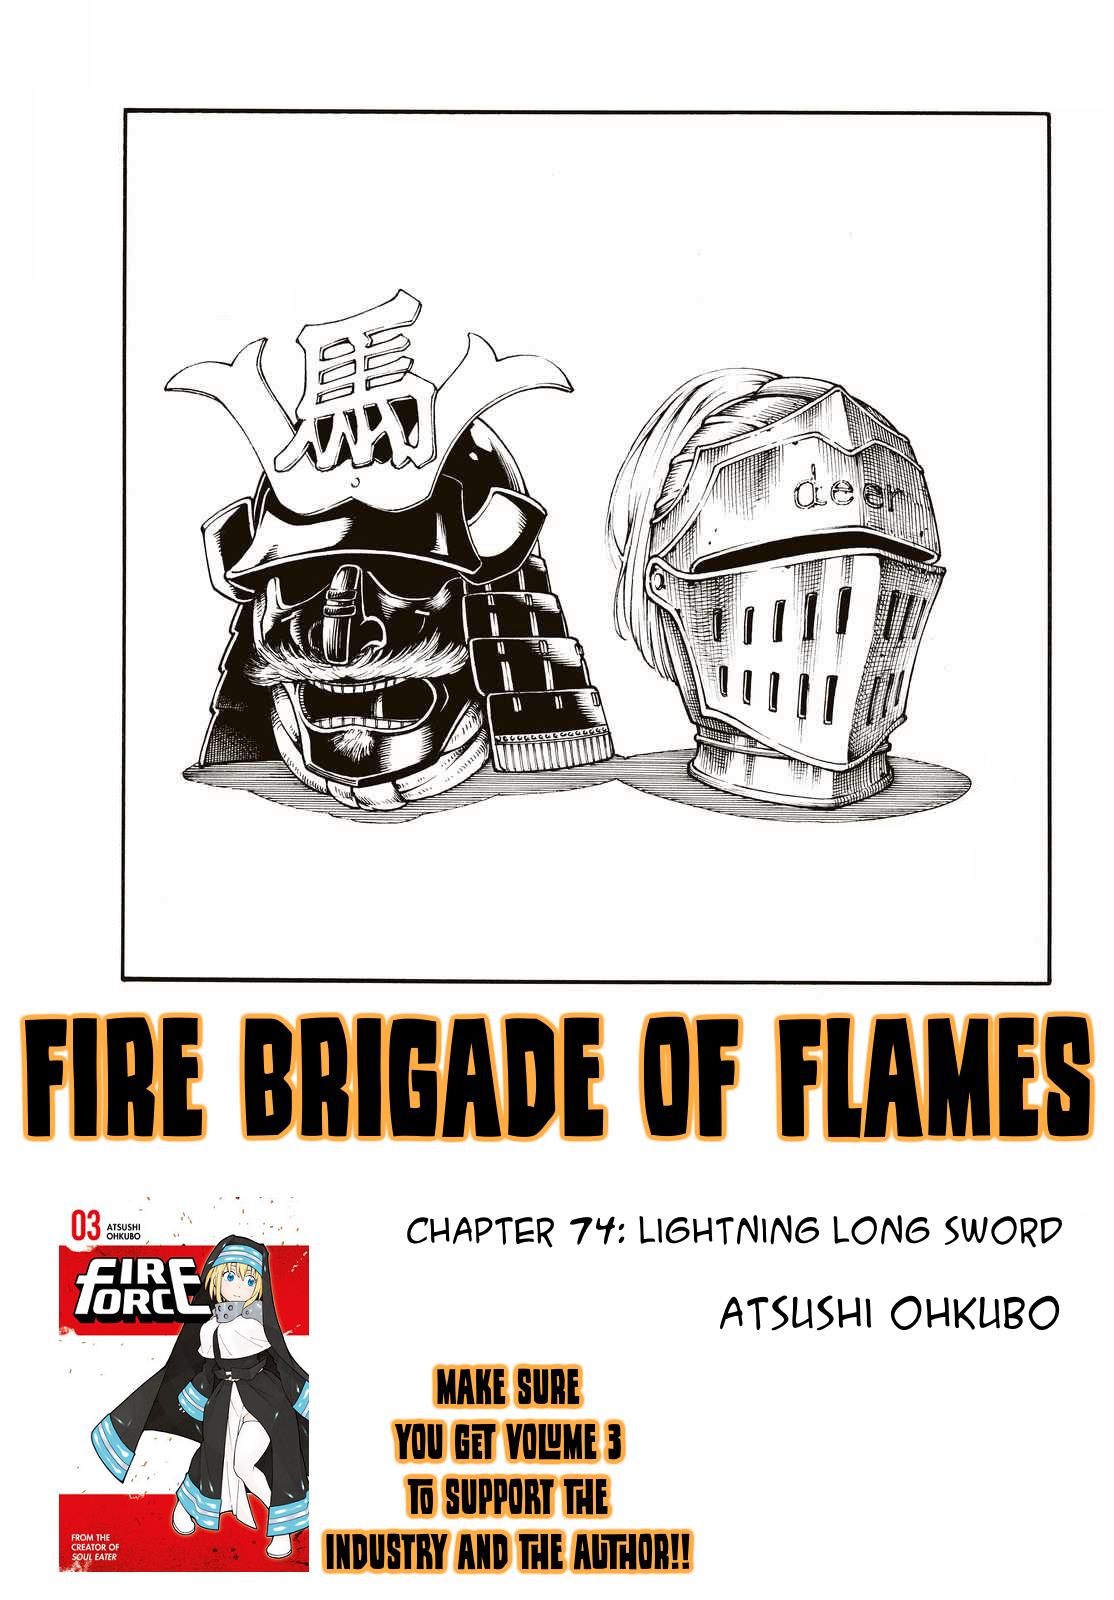 Fire Force Vol. 9 Ch. 74 Lightning Long Sword